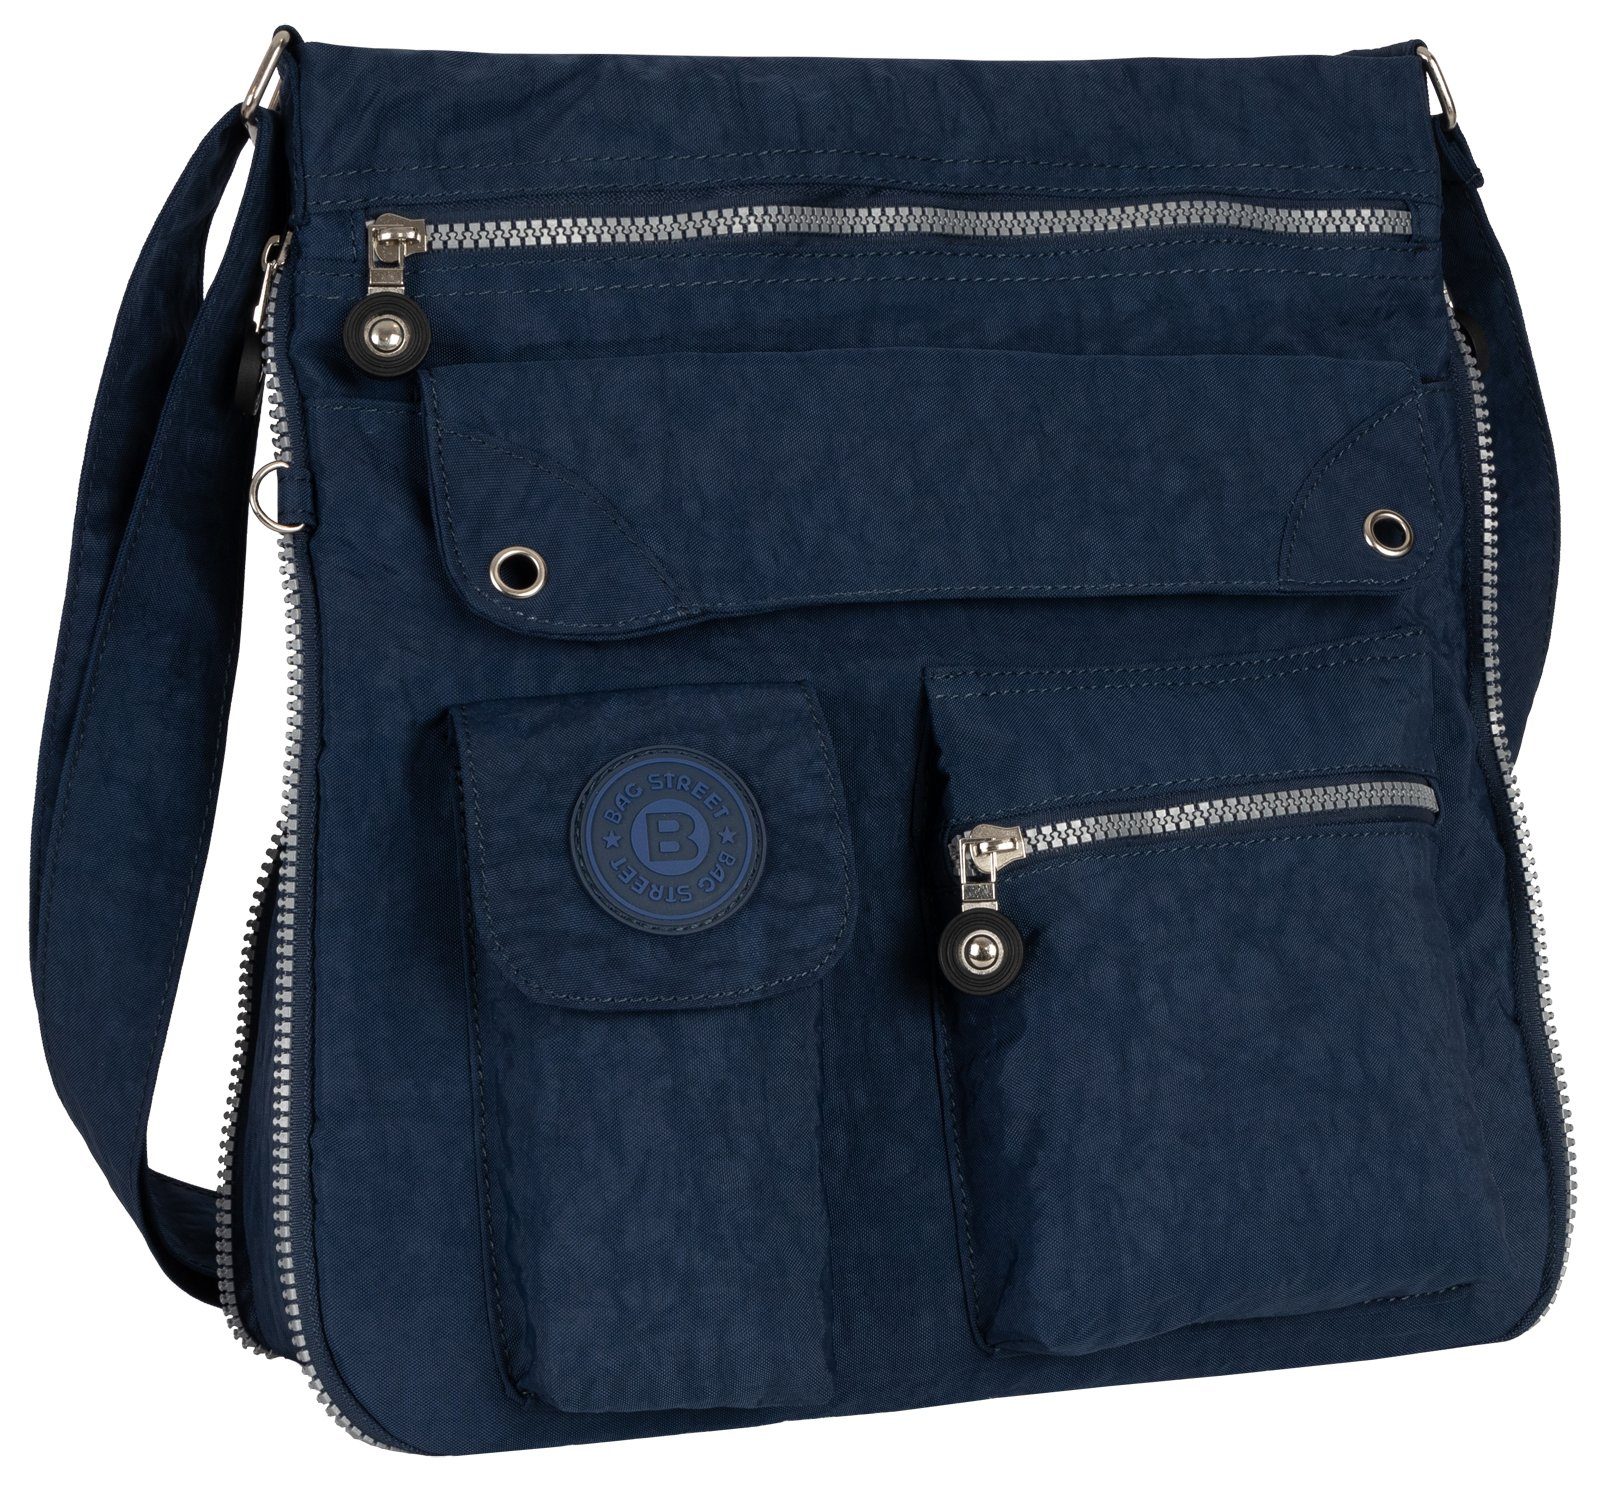 günstig neu BAG STREET Schlüsseltasche als Schultertasche Schwarz, Schultertasche, Damentasche Handtasche Blau Umhängetasche Umhängetasche tragbar